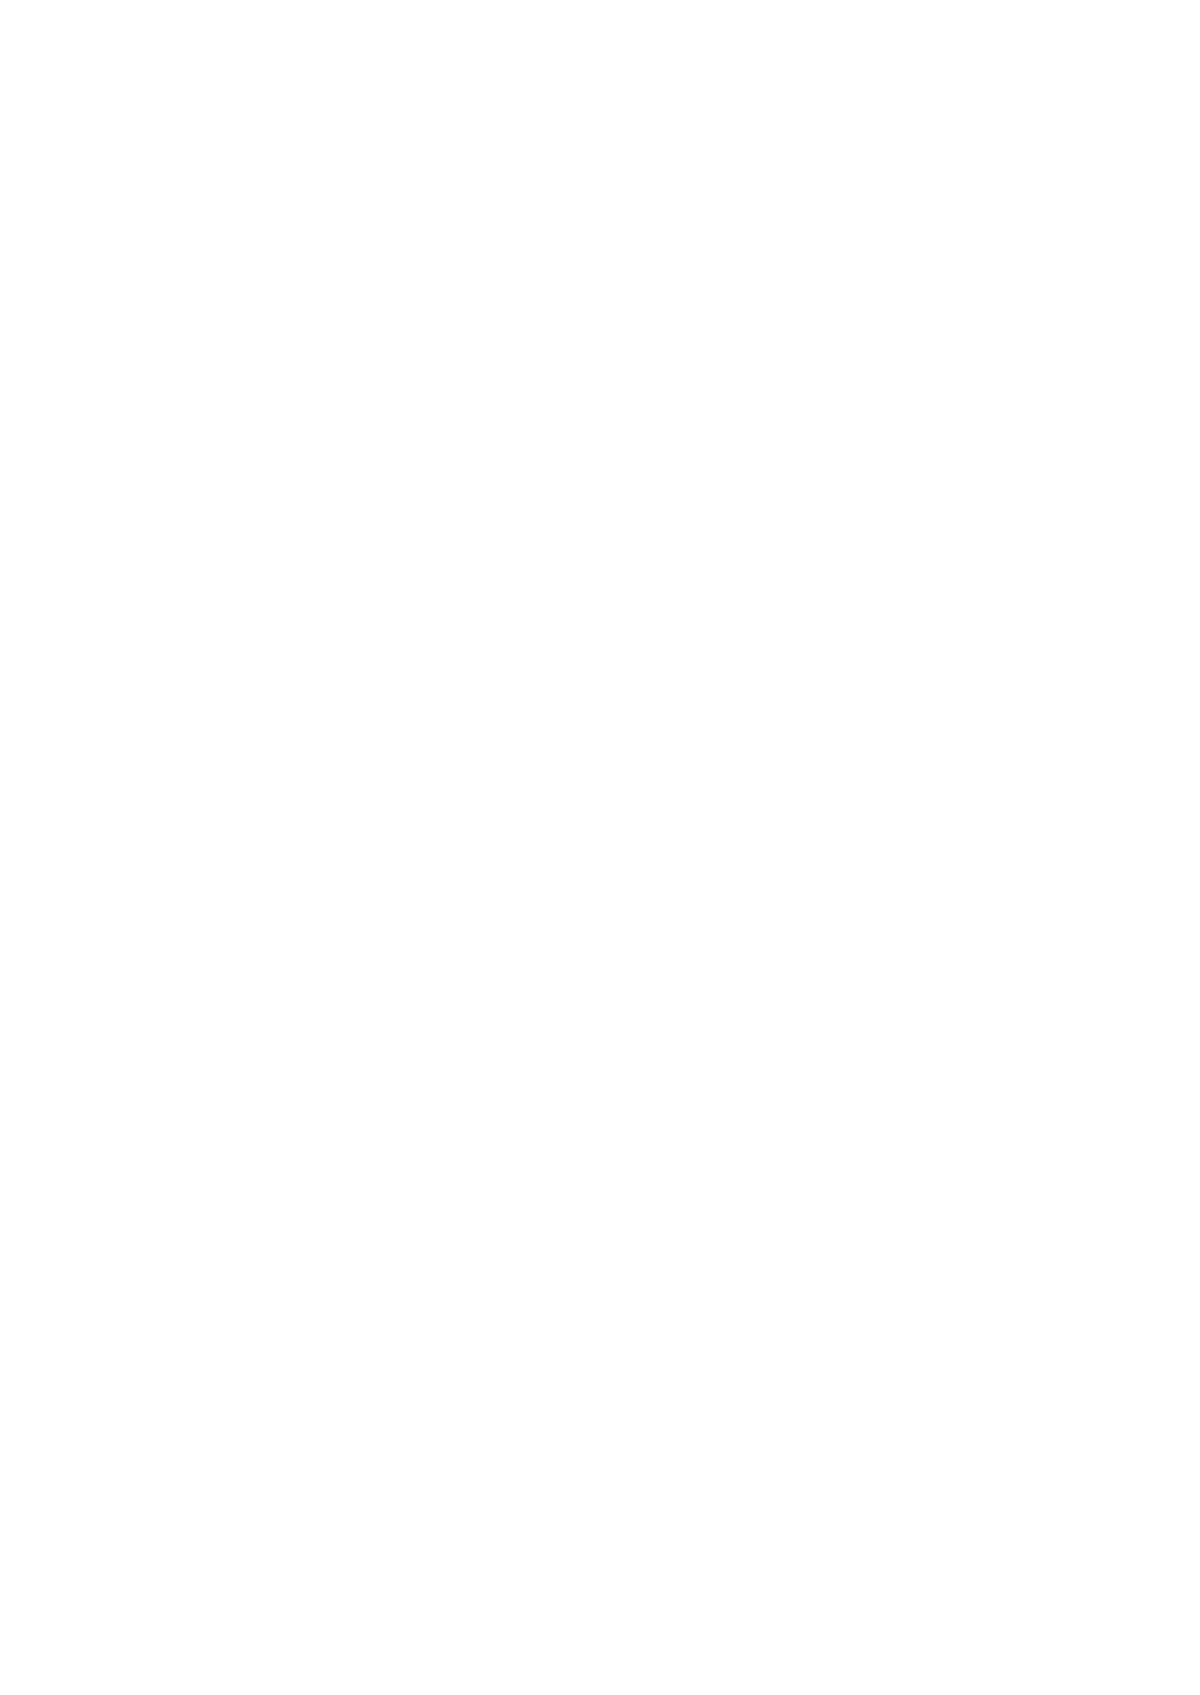 [BBBえくすとら (忠臣蔵之介)] THE KOUKAKUM@STER (アイドルマスター) [DL版]